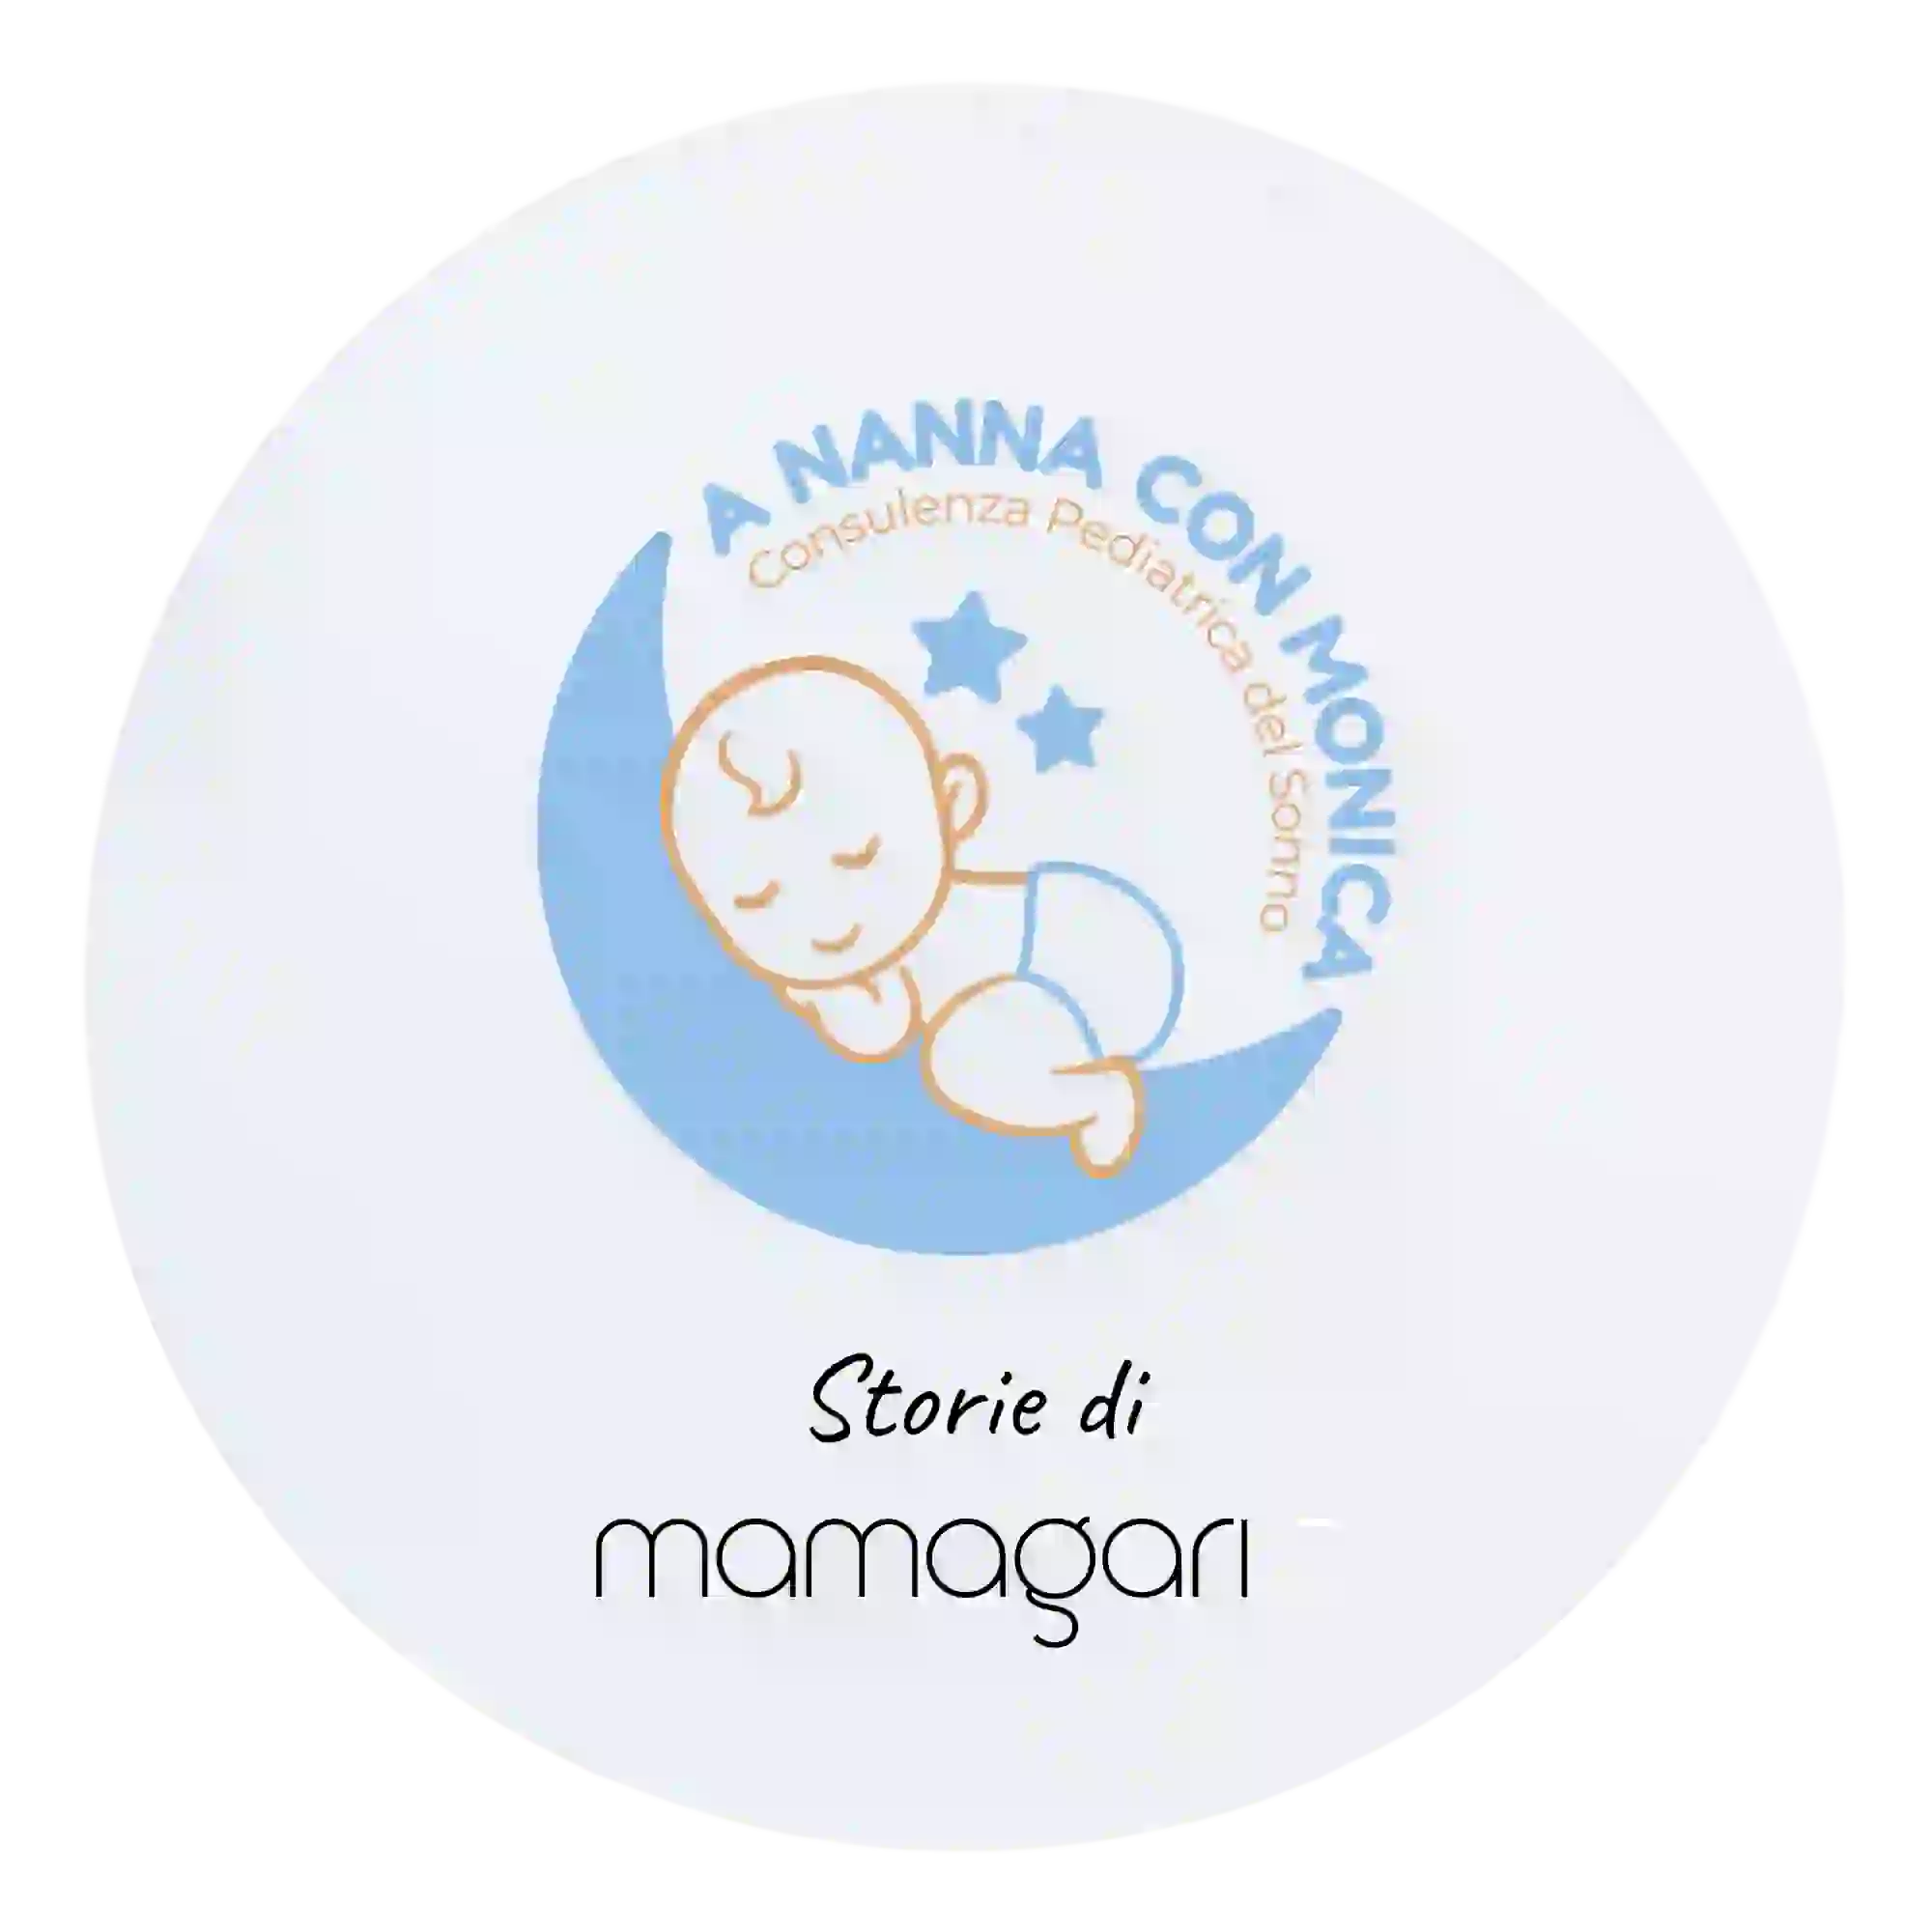 A nanna con monica Agenzia di web marketing italia seo google ads social e website